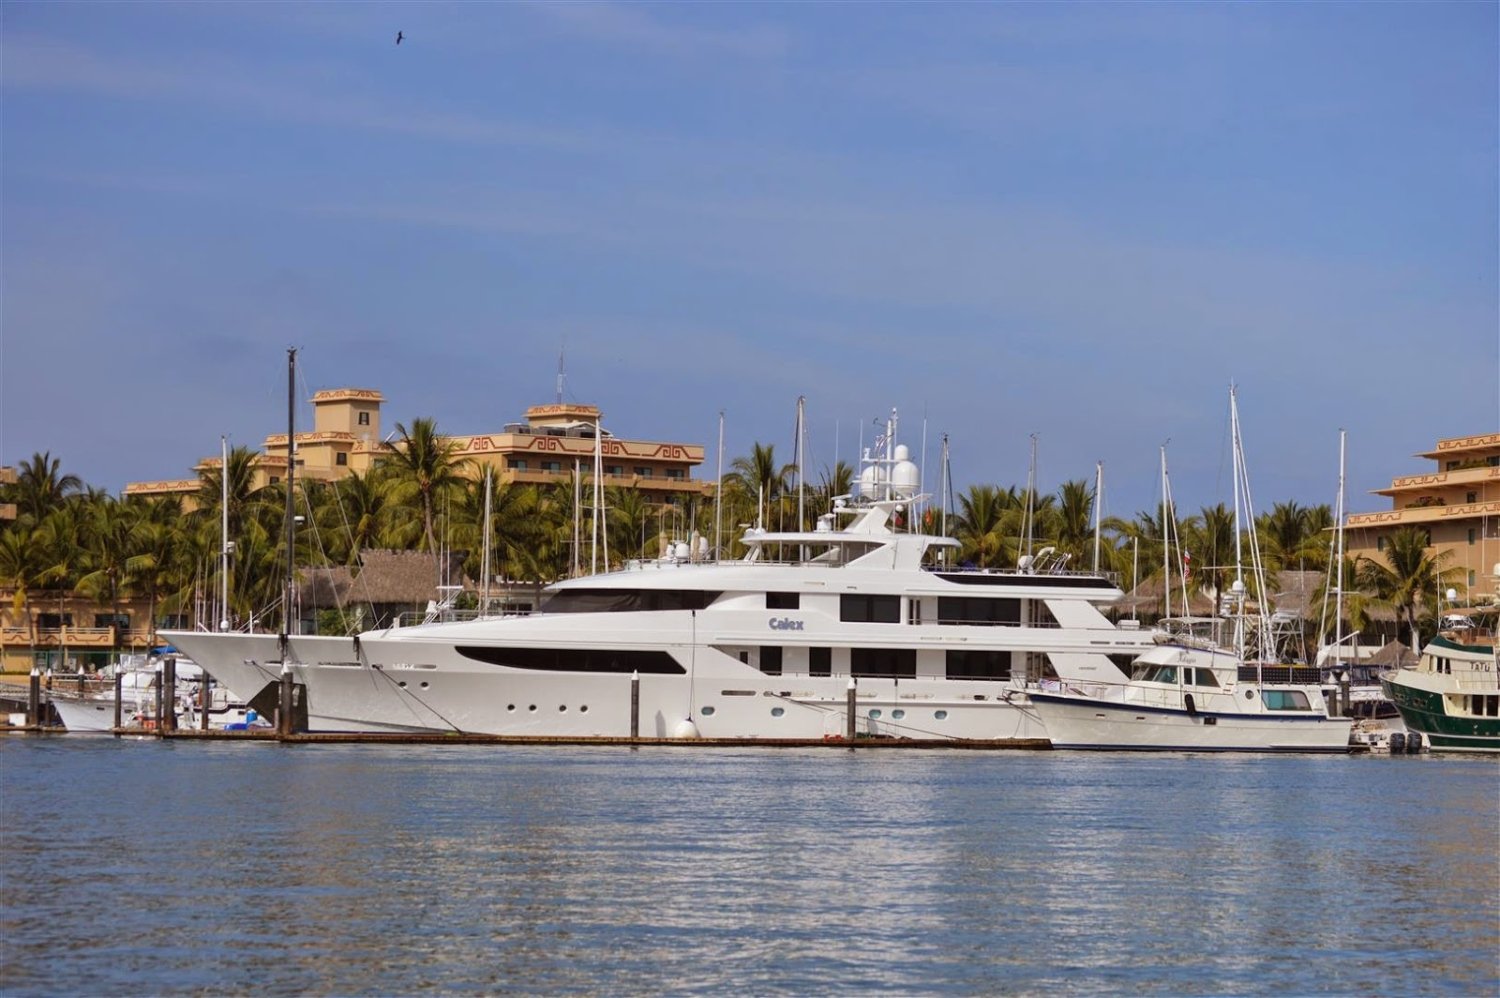 the calex yacht